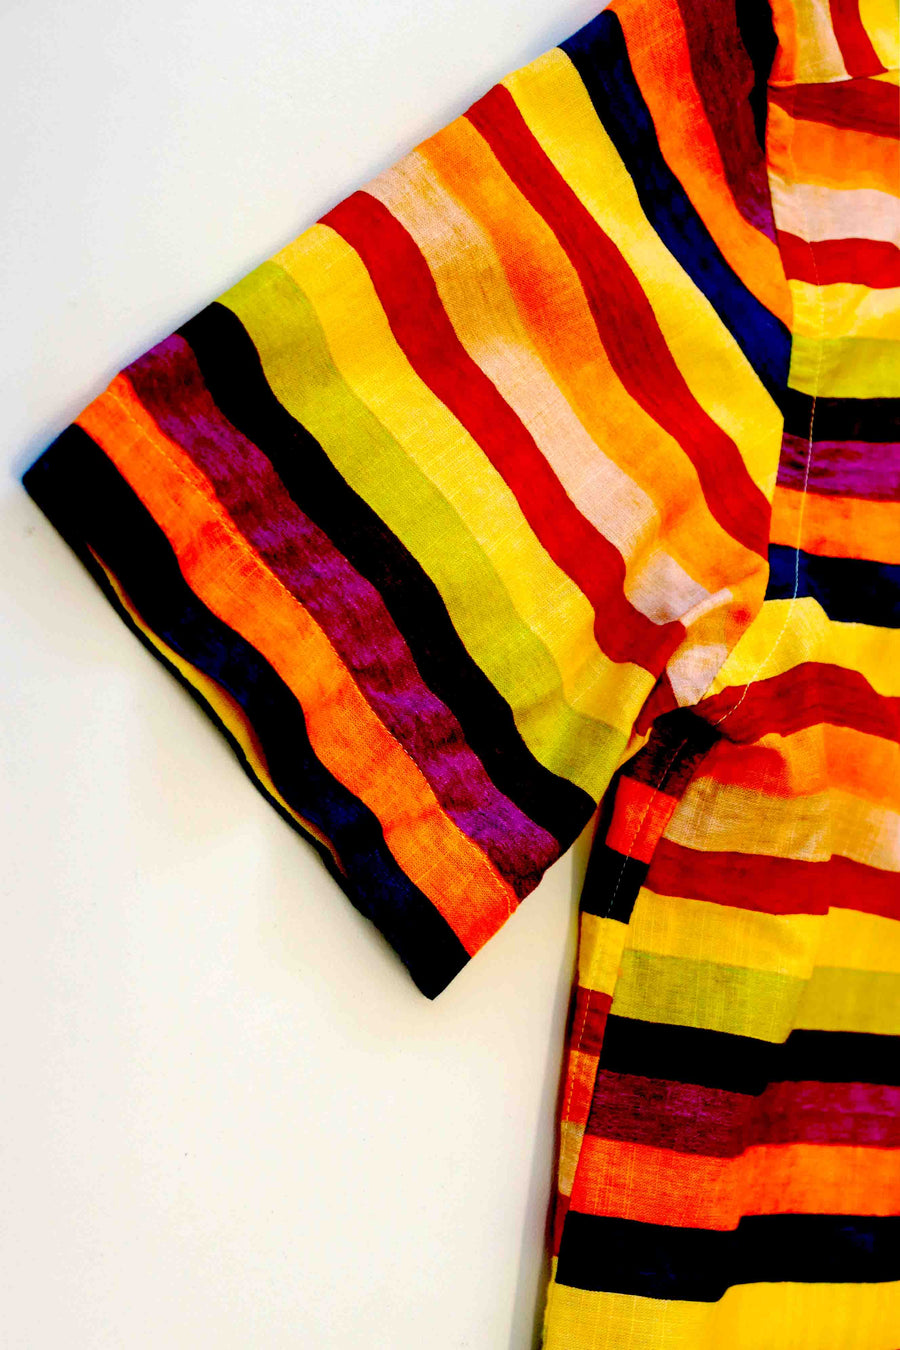 Osvaldo Trucchi S/S Shirt | Horizontal Stripe Ochre